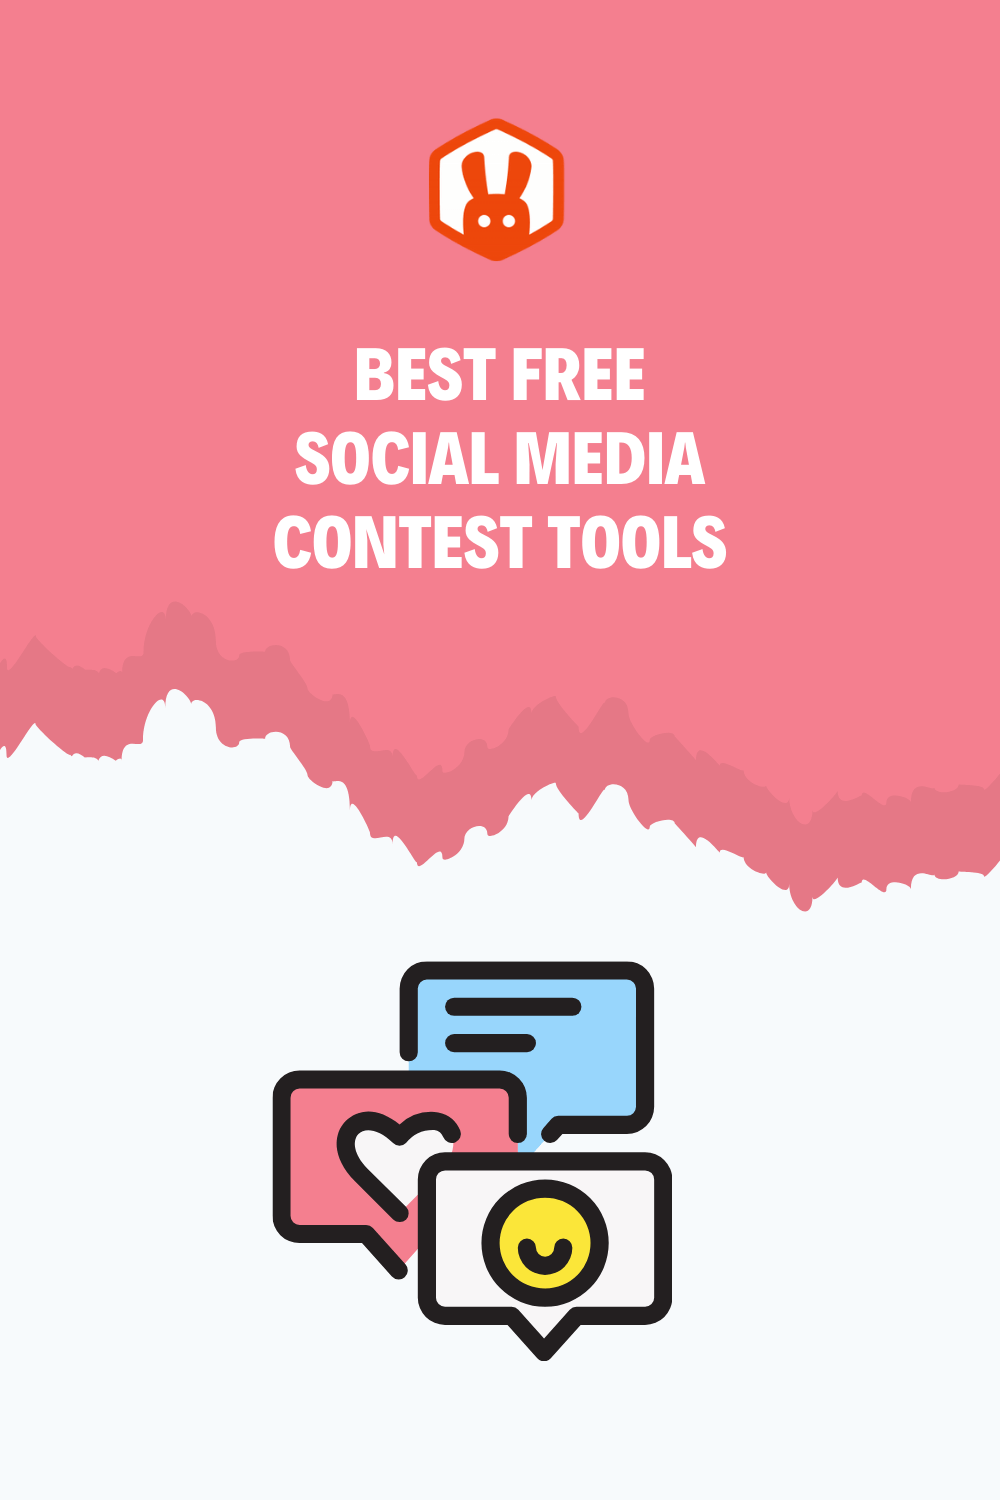 Giveaway Winner Picker Tool for Social Media Contests - Osortoo